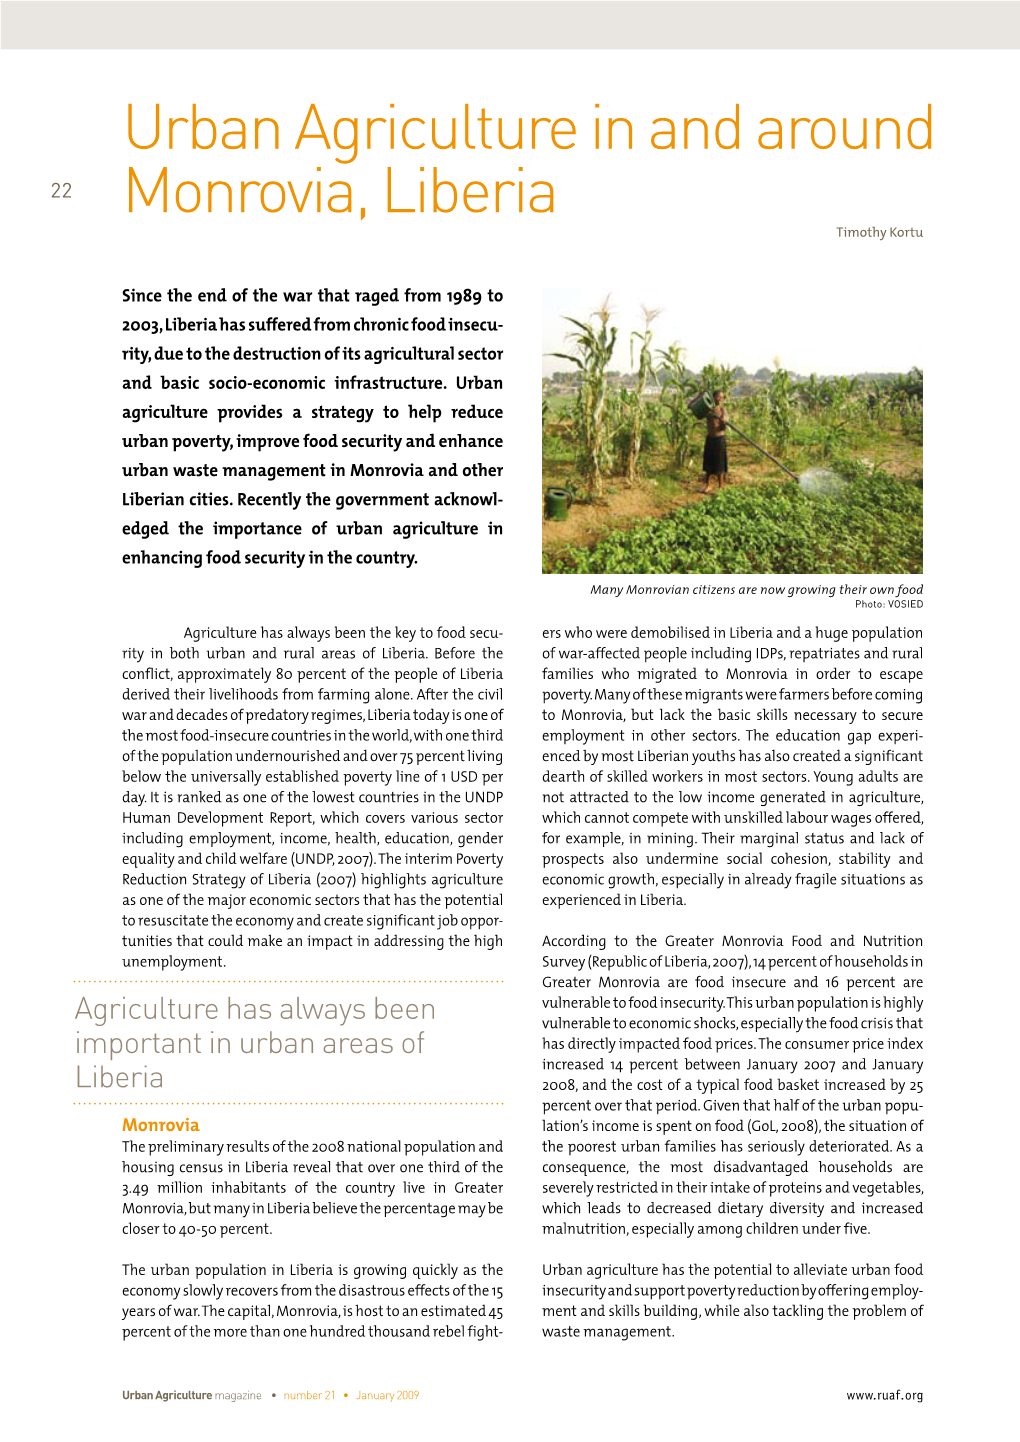 Urban Agriculture in and Around Monrovia, Liberia